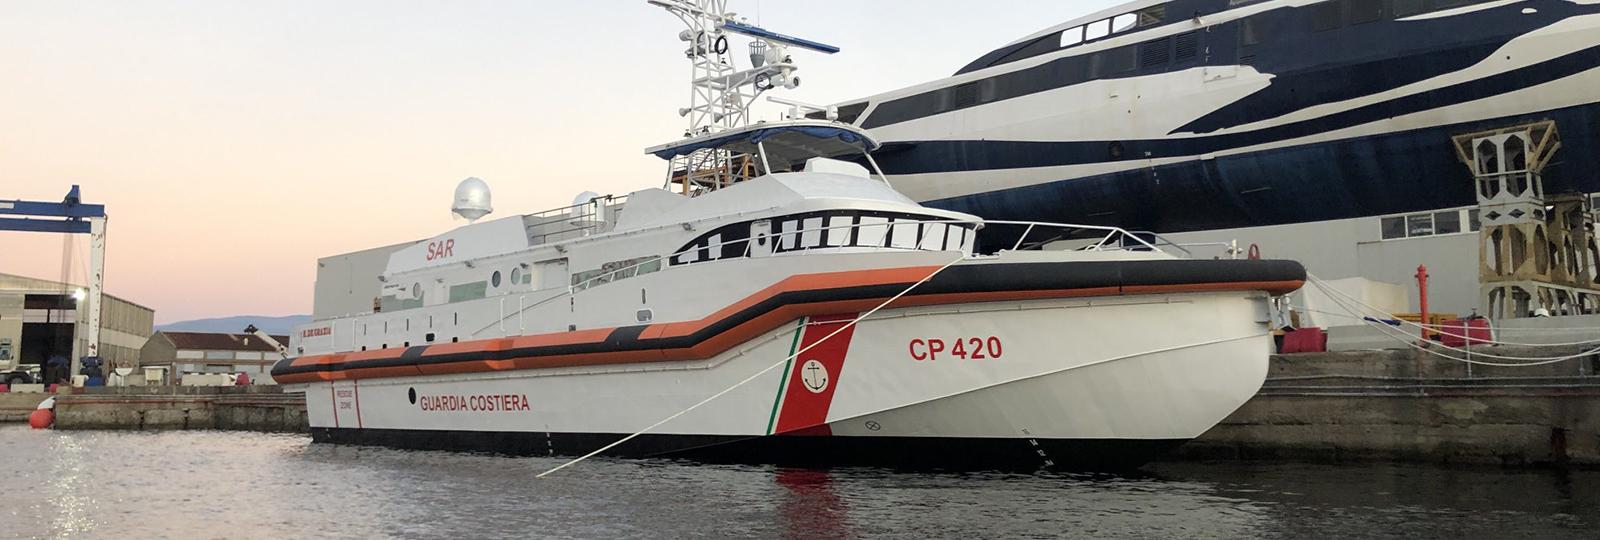 Guardia Costiera Genova CP420 SAR